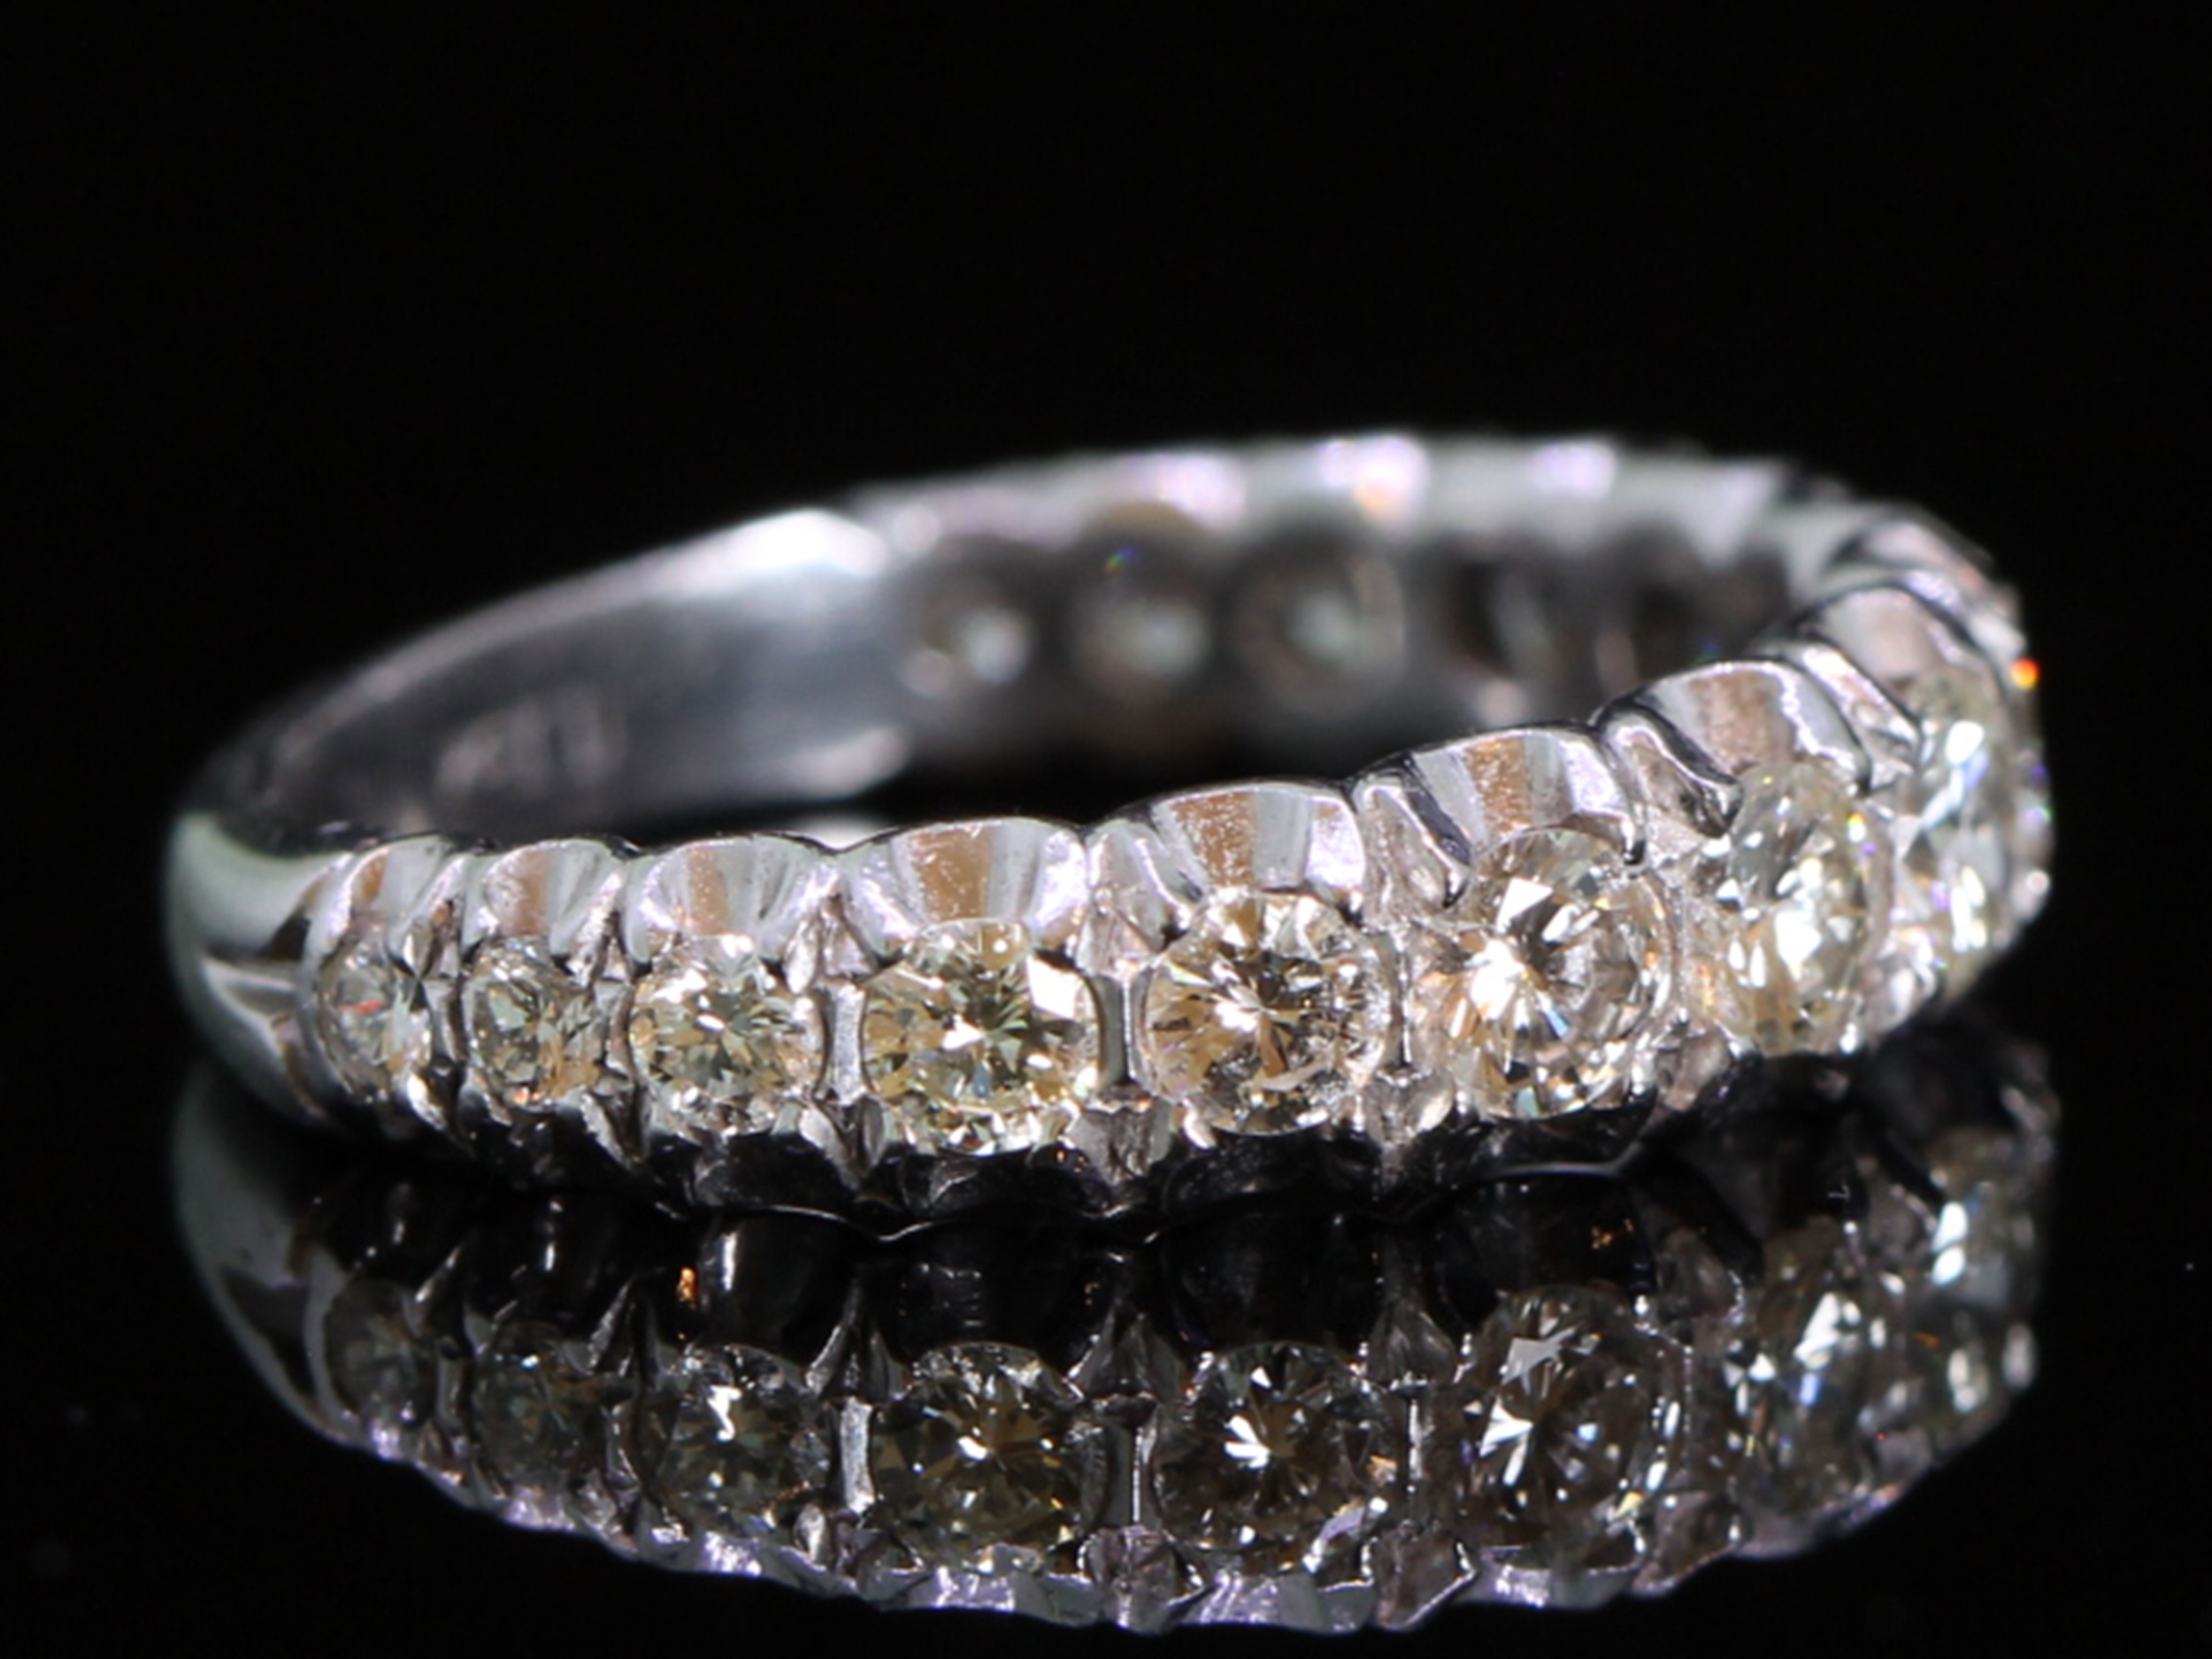 Beautiful 3/4 Diamond 18 Carat White Gold Eternity Ring